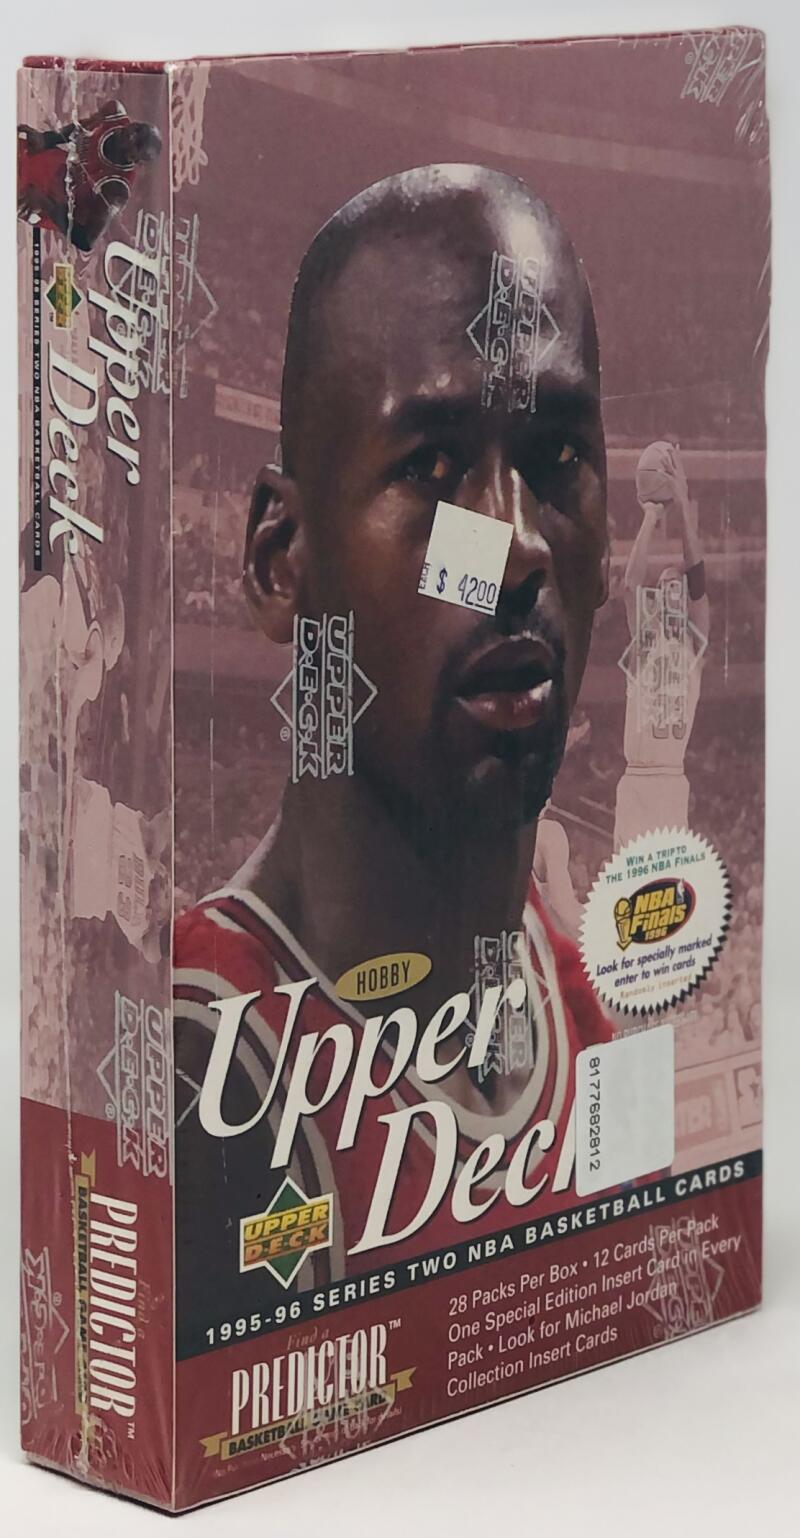 1995-96 Upper Deck Series 2 Basketball Hobby Box Image 1